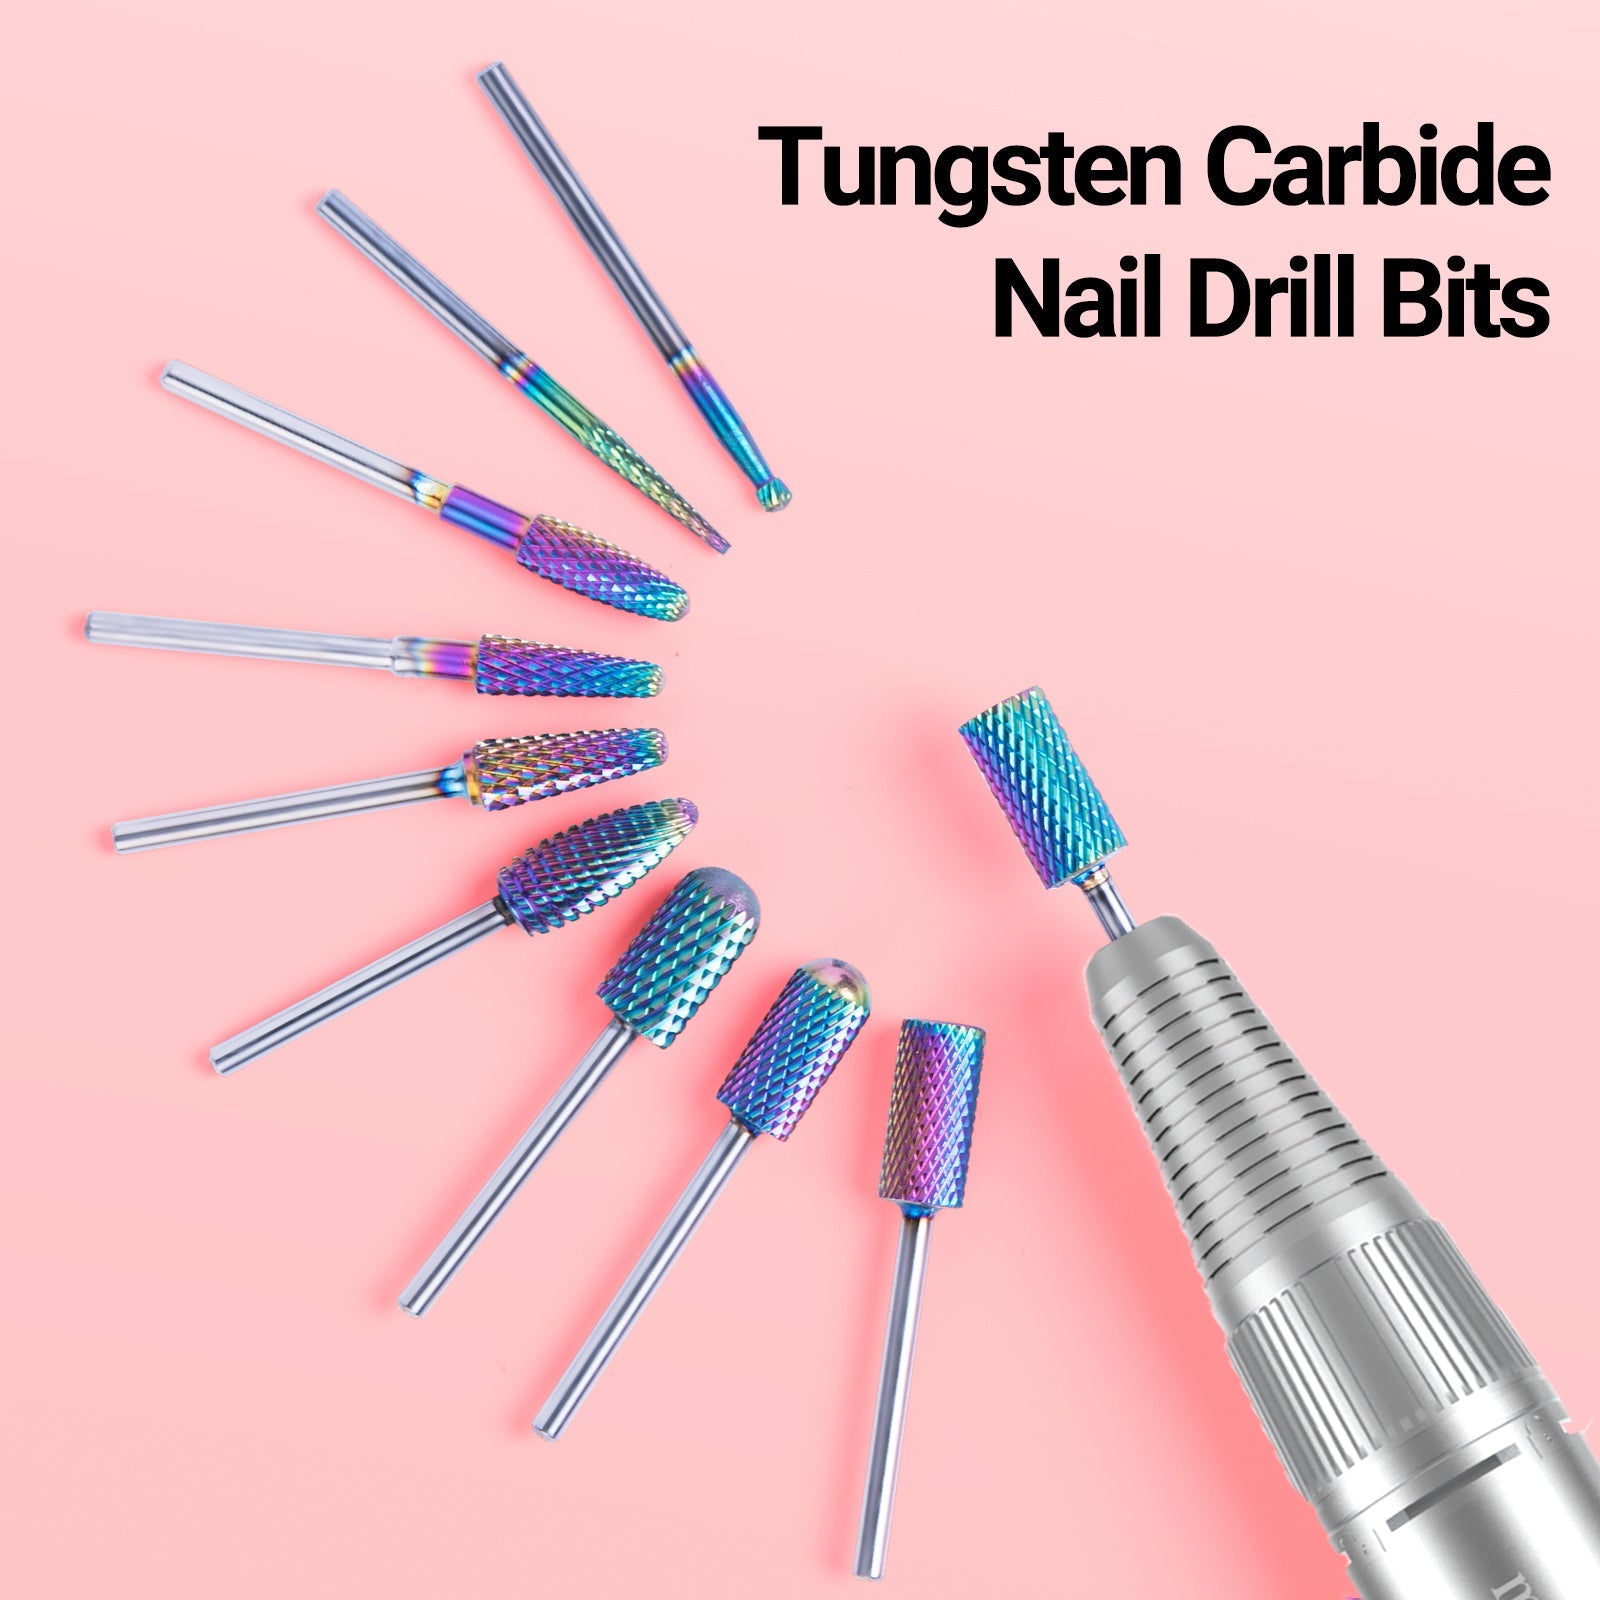 New Colorful Tungsten Carbide Nail Drill Bits Set (10pcs)